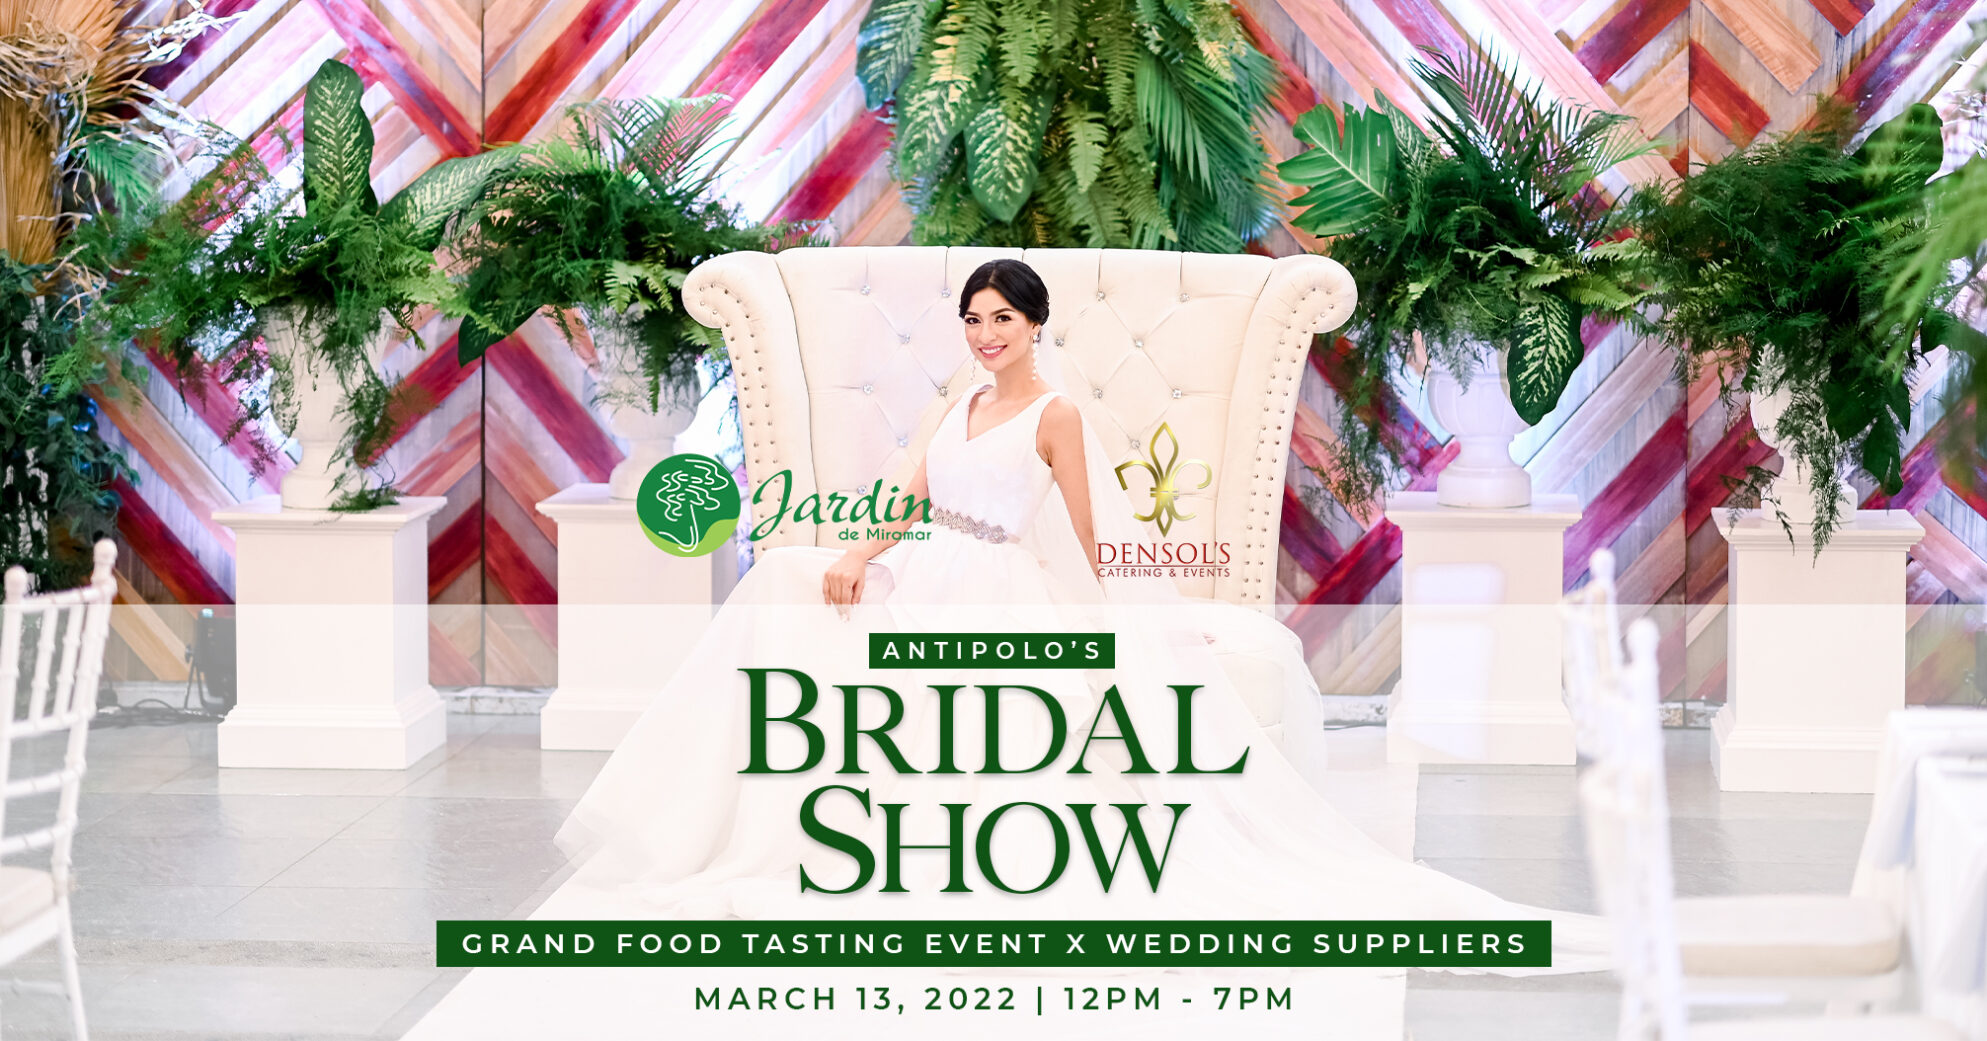 Antipolo's Bridal Show